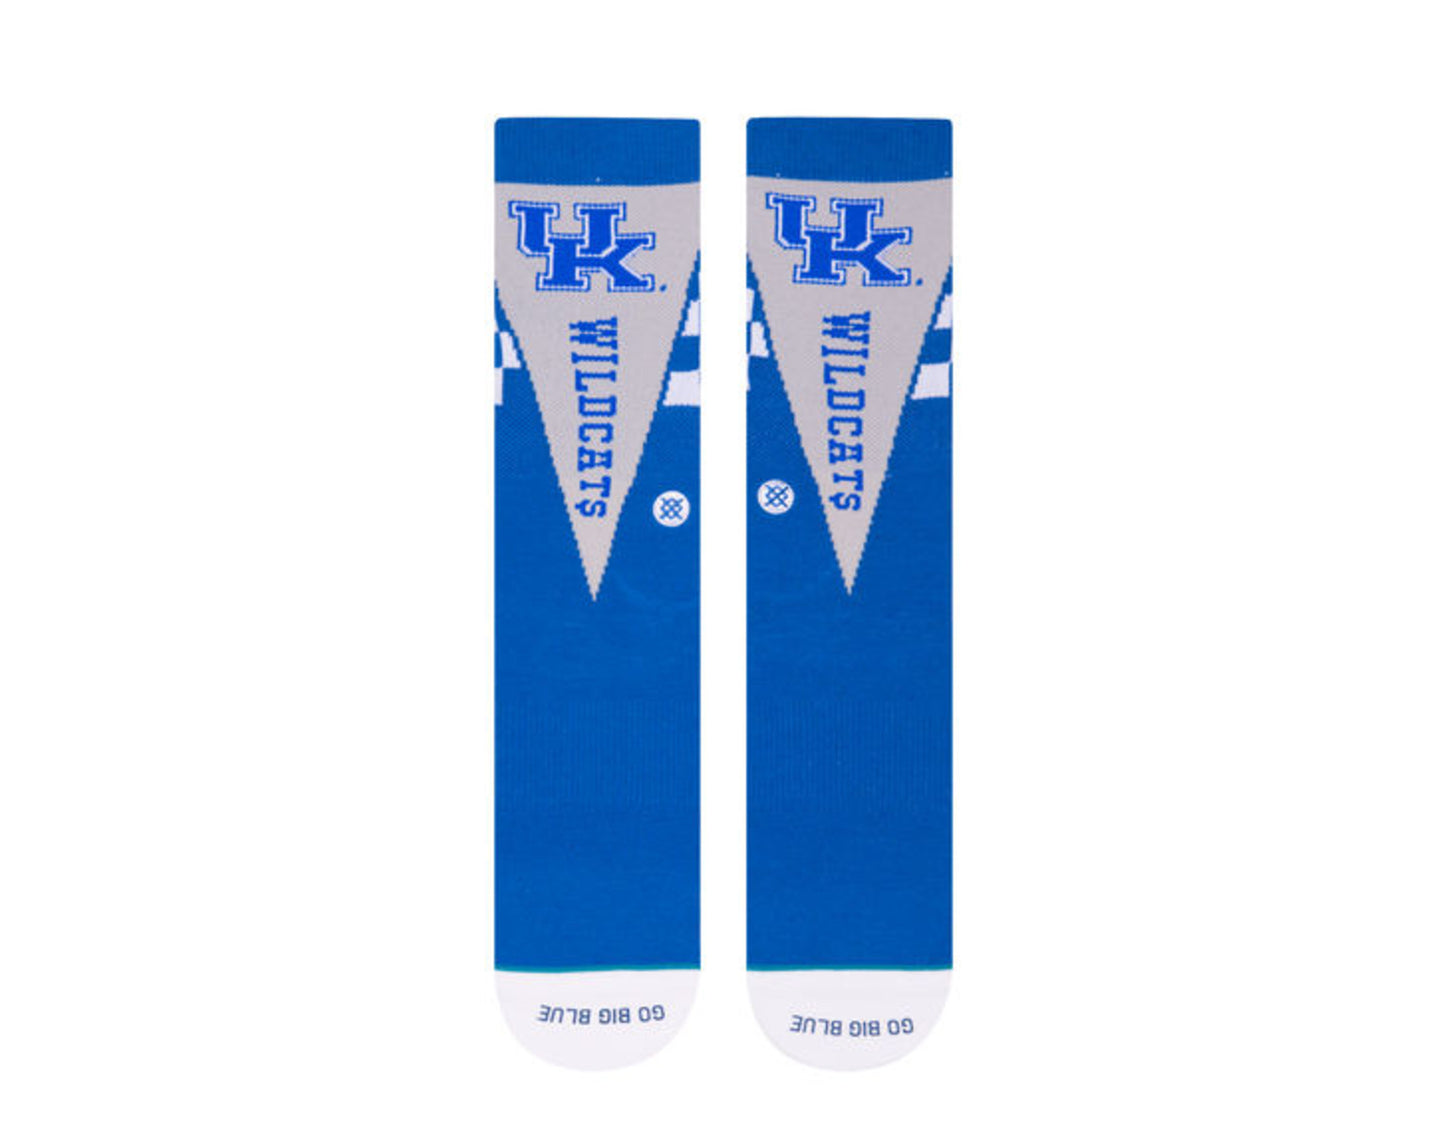 Stance NCAA Kentucky Pennant Socks